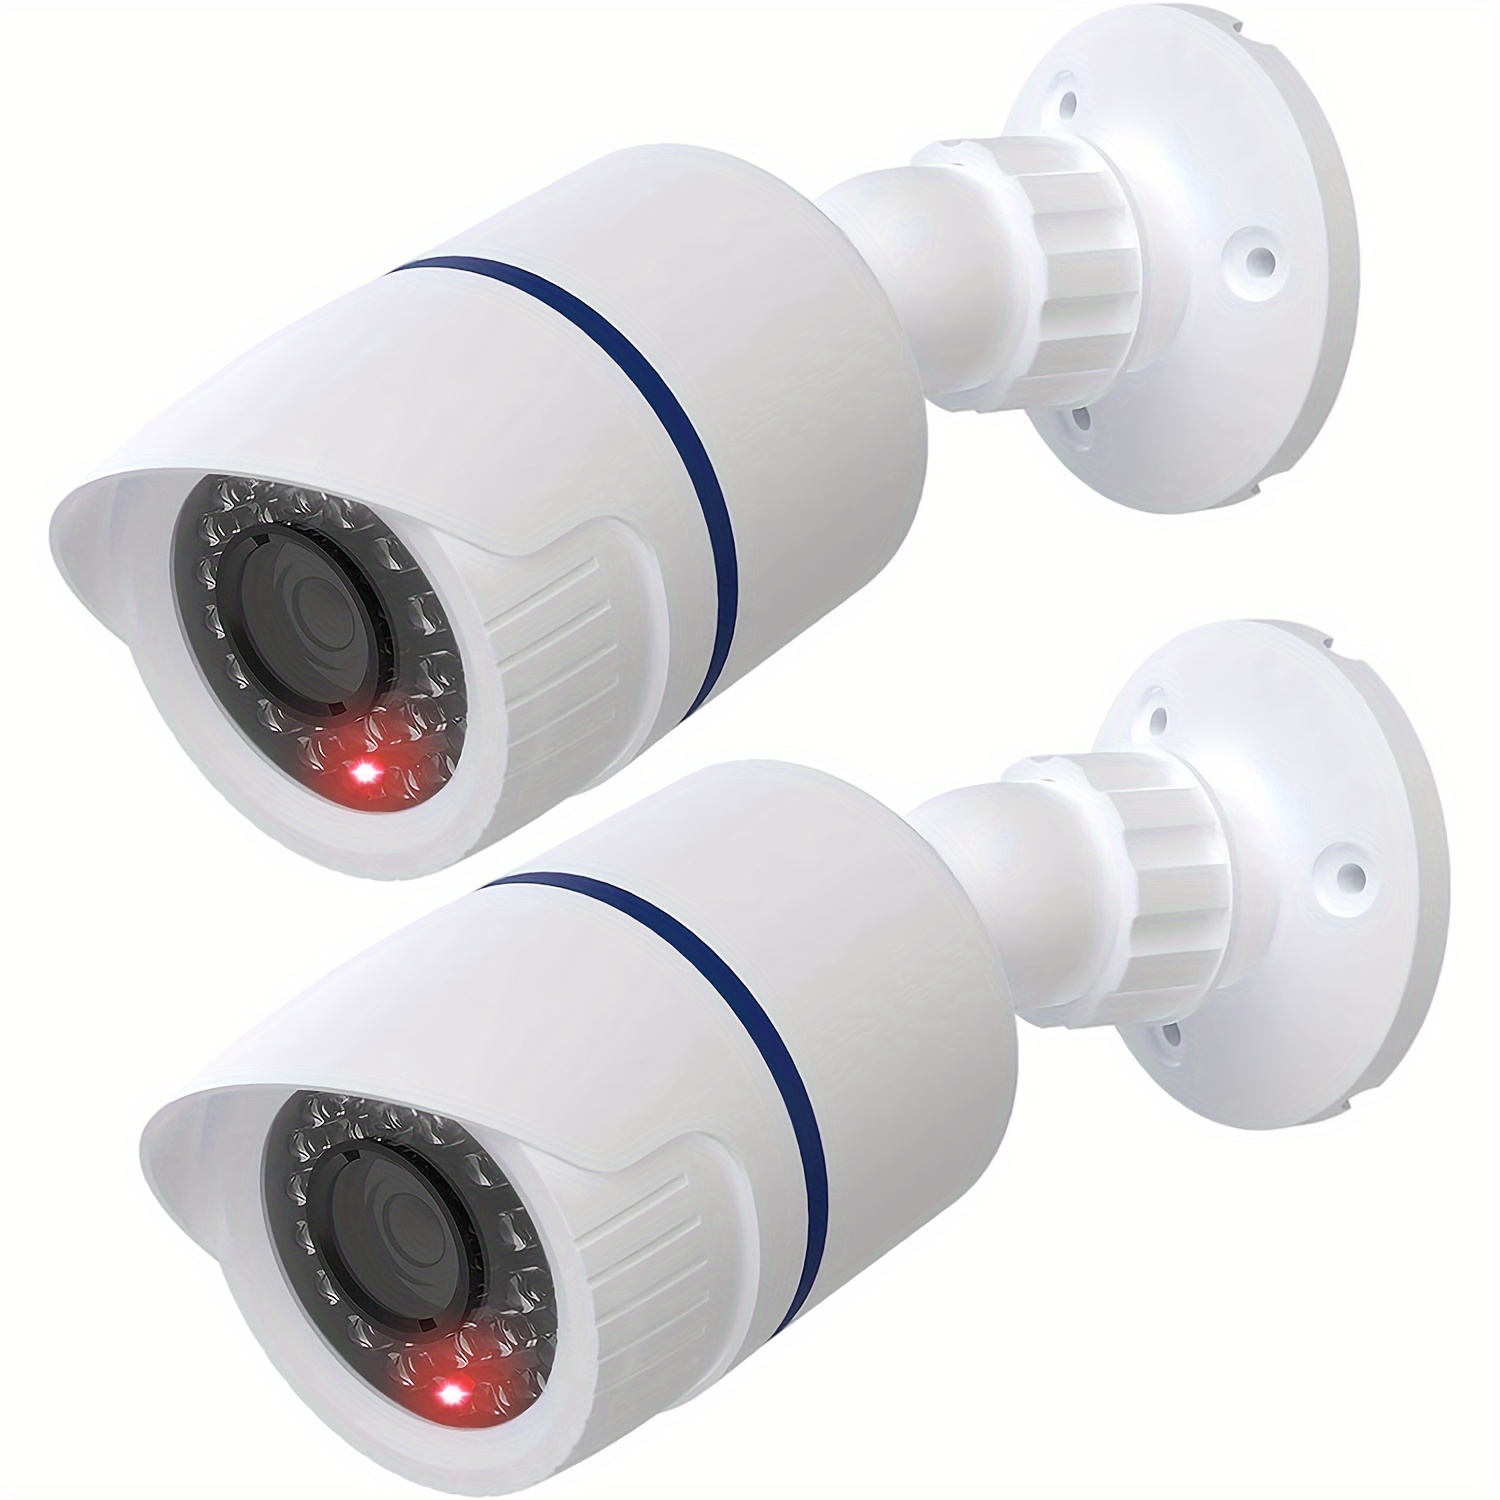 Macarrie 8 cámaras falsas de seguridad falsas, cámara falsa realista,  cámara falsa de plástico, sistema de vigilancia CCTV con luz LED de  movimiento